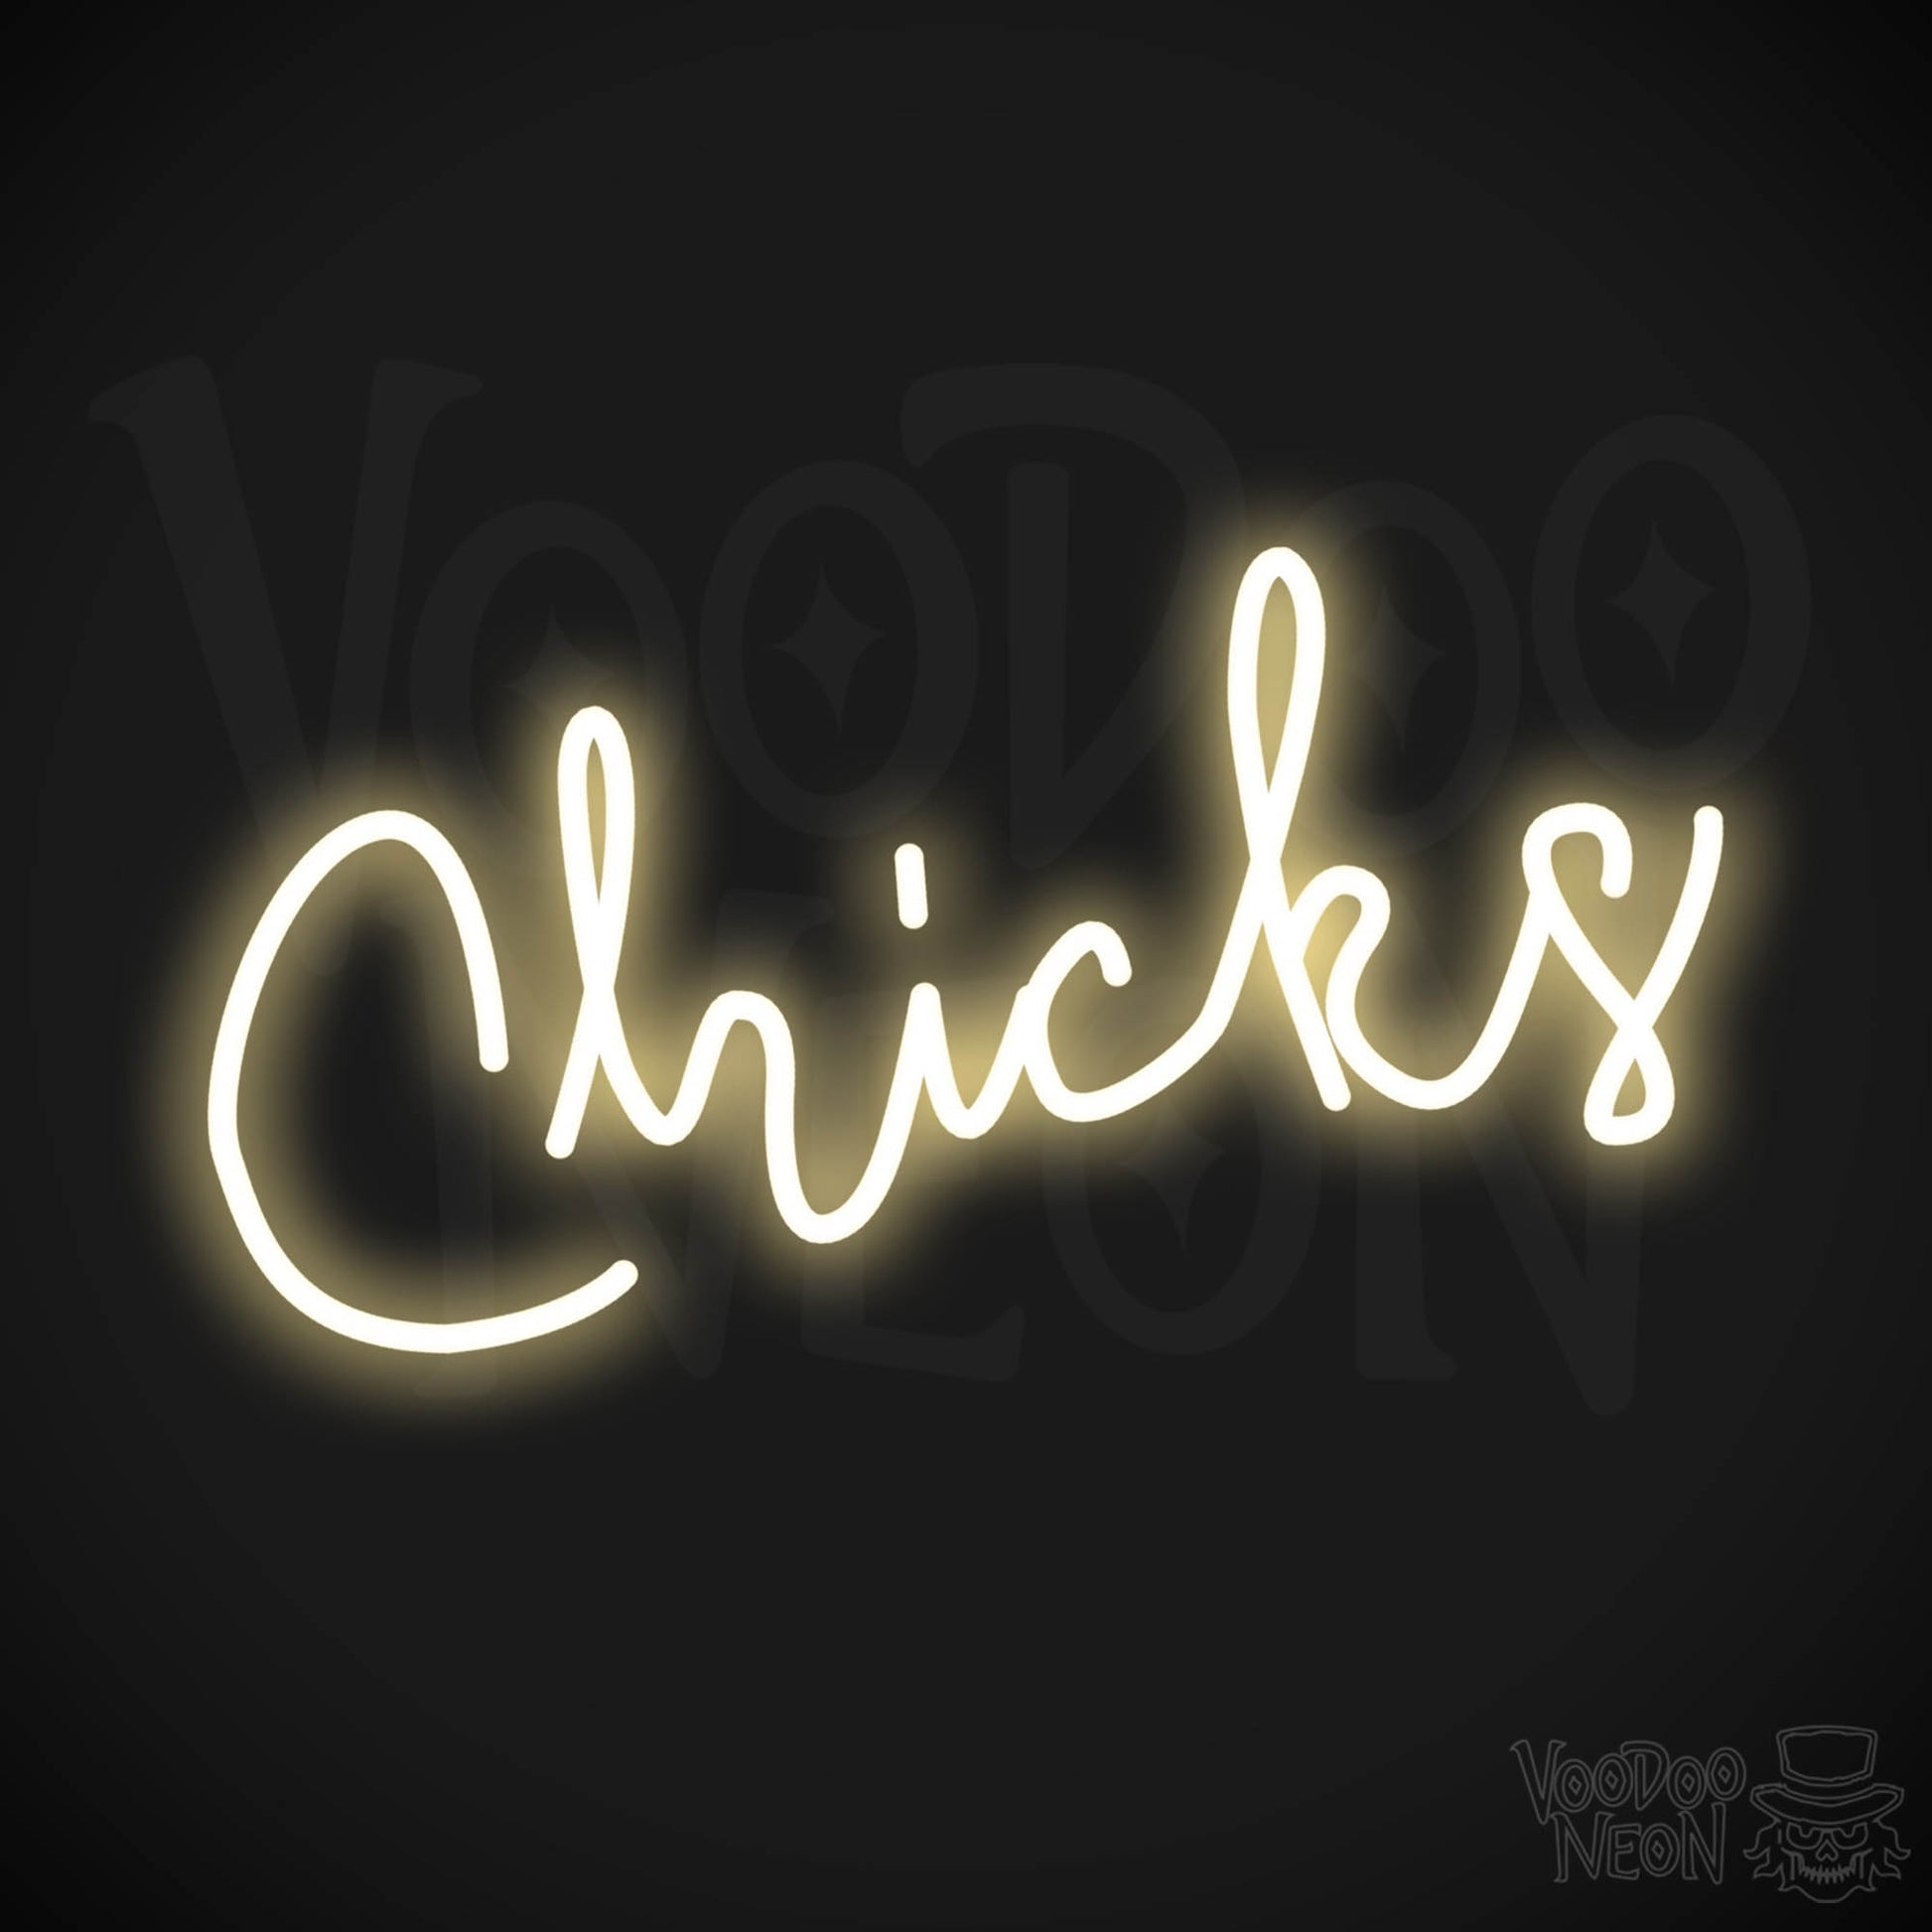 Chicks LED Neon - Warm White